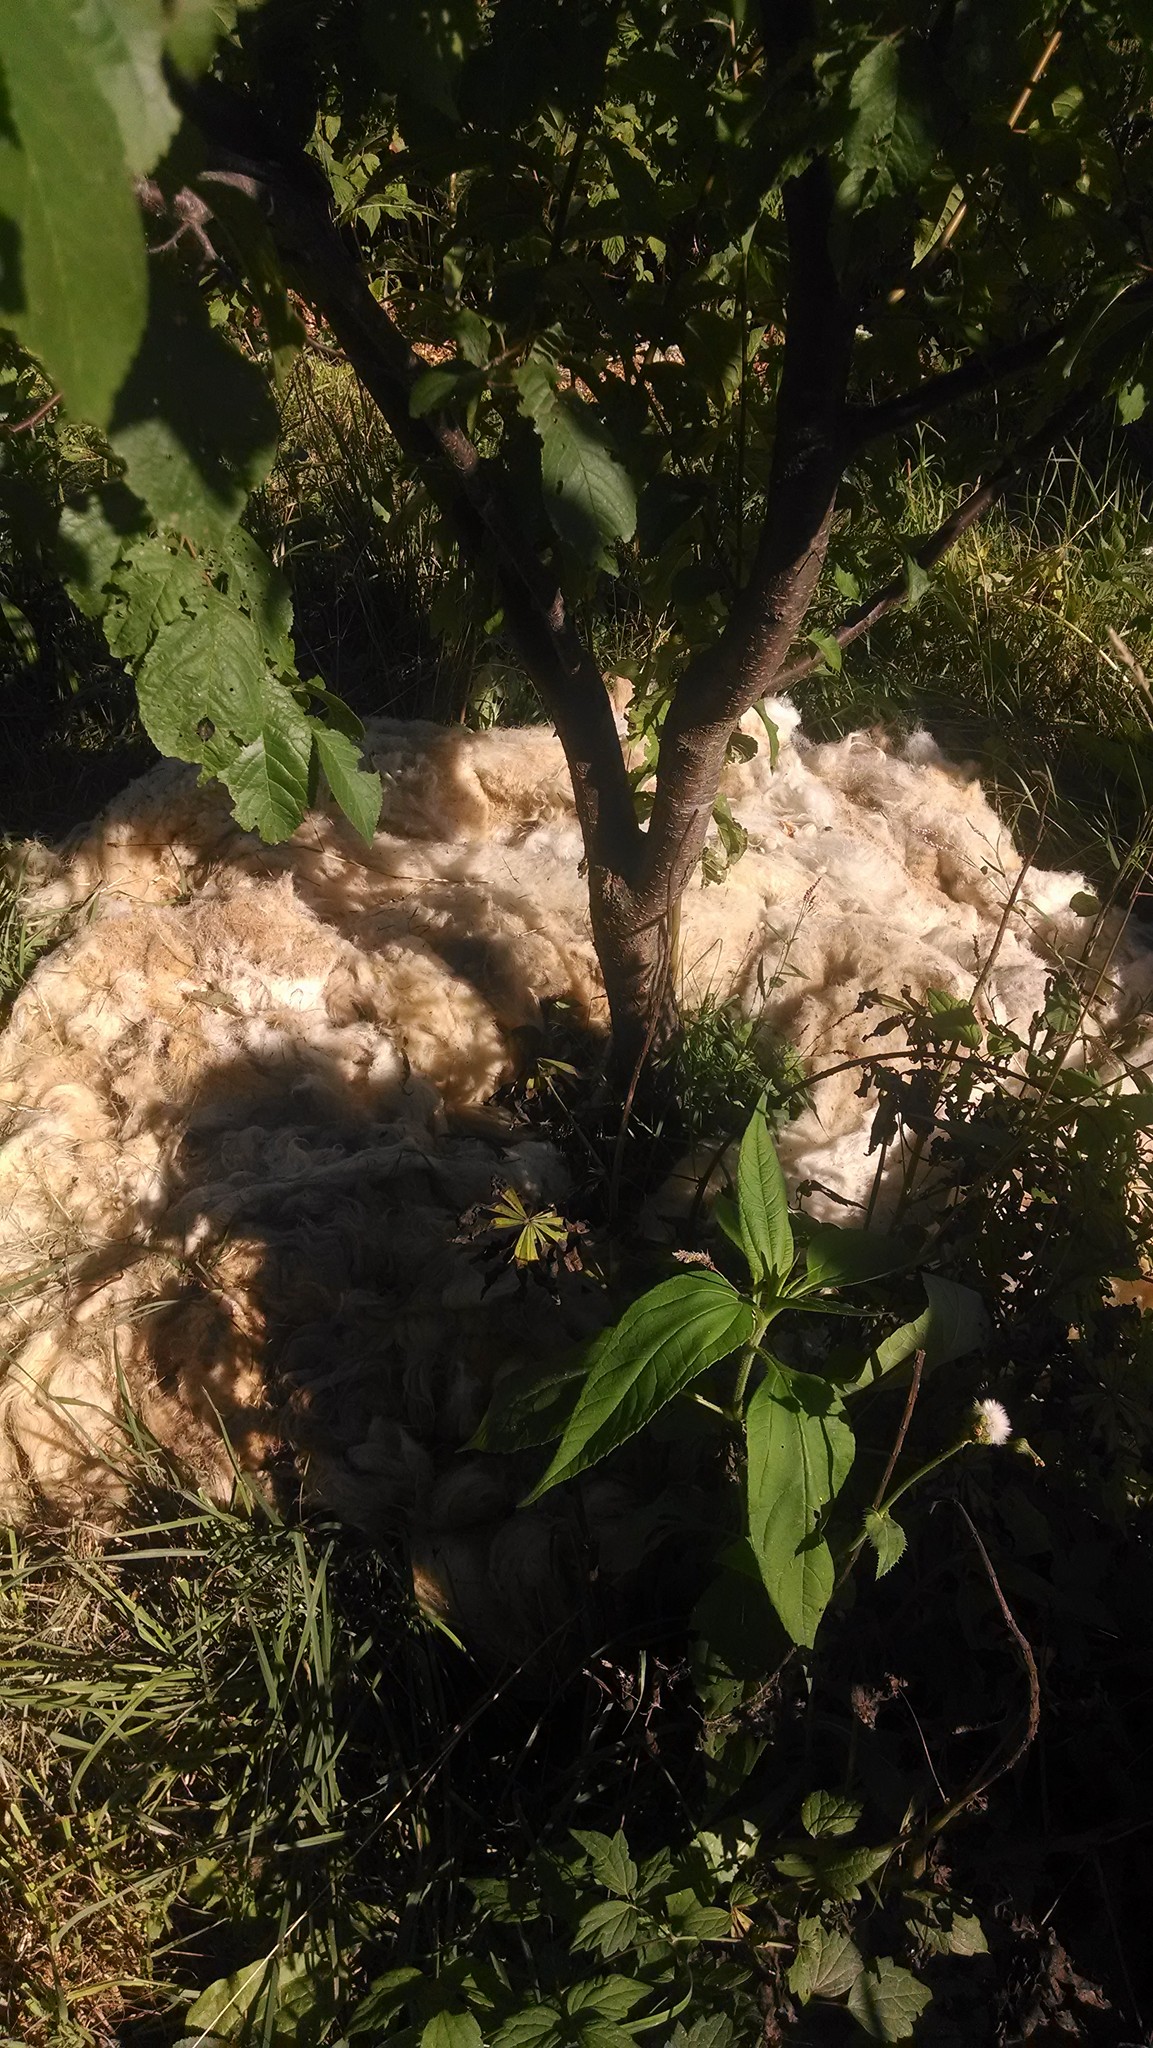 Sheep's wool used as mulch around trees